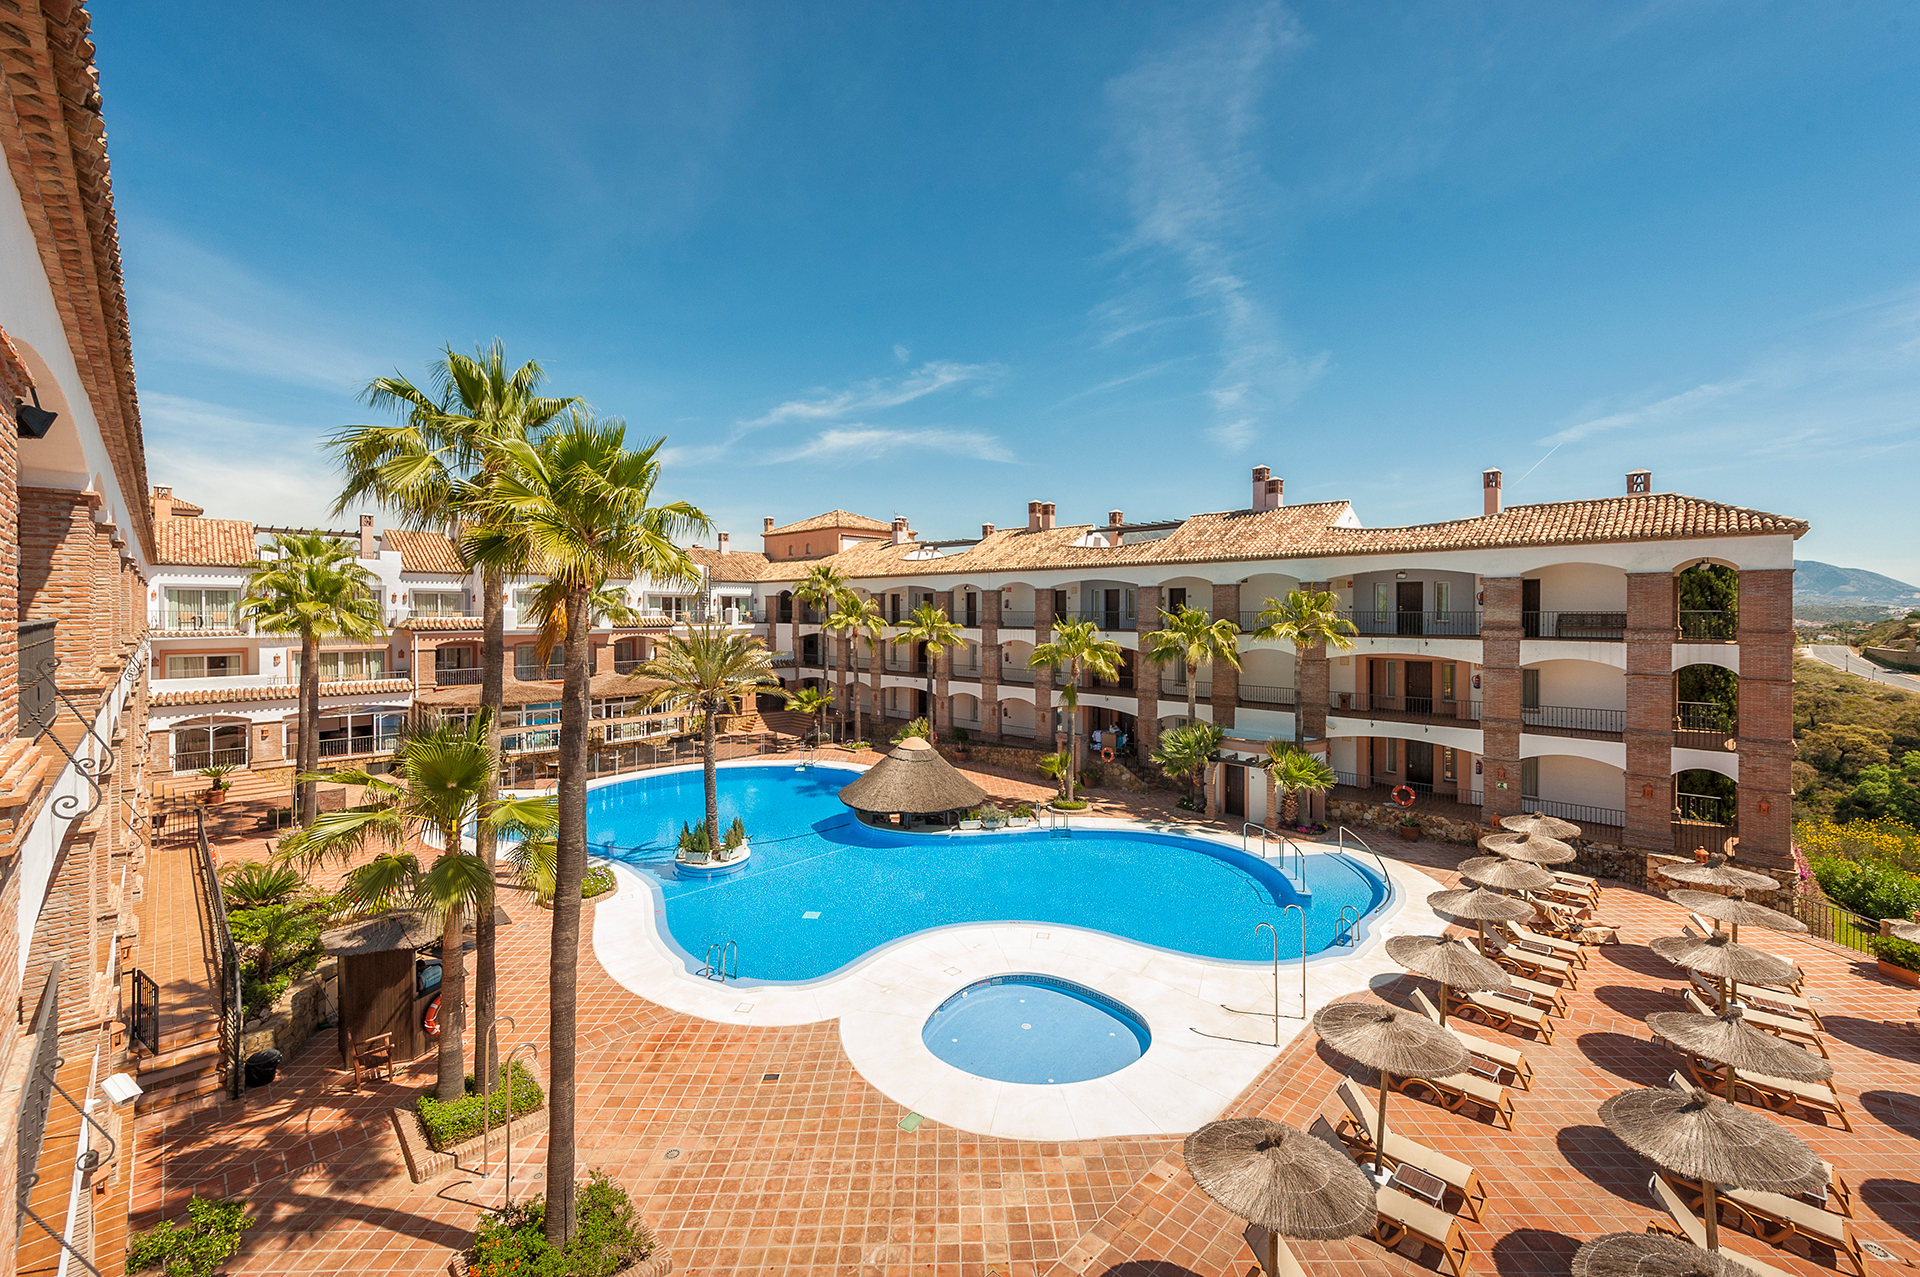 Golf-Expedition-Golf-reizen-Spanje-Regio-Malaga-La-Cala-Resort-hotel-pool-2